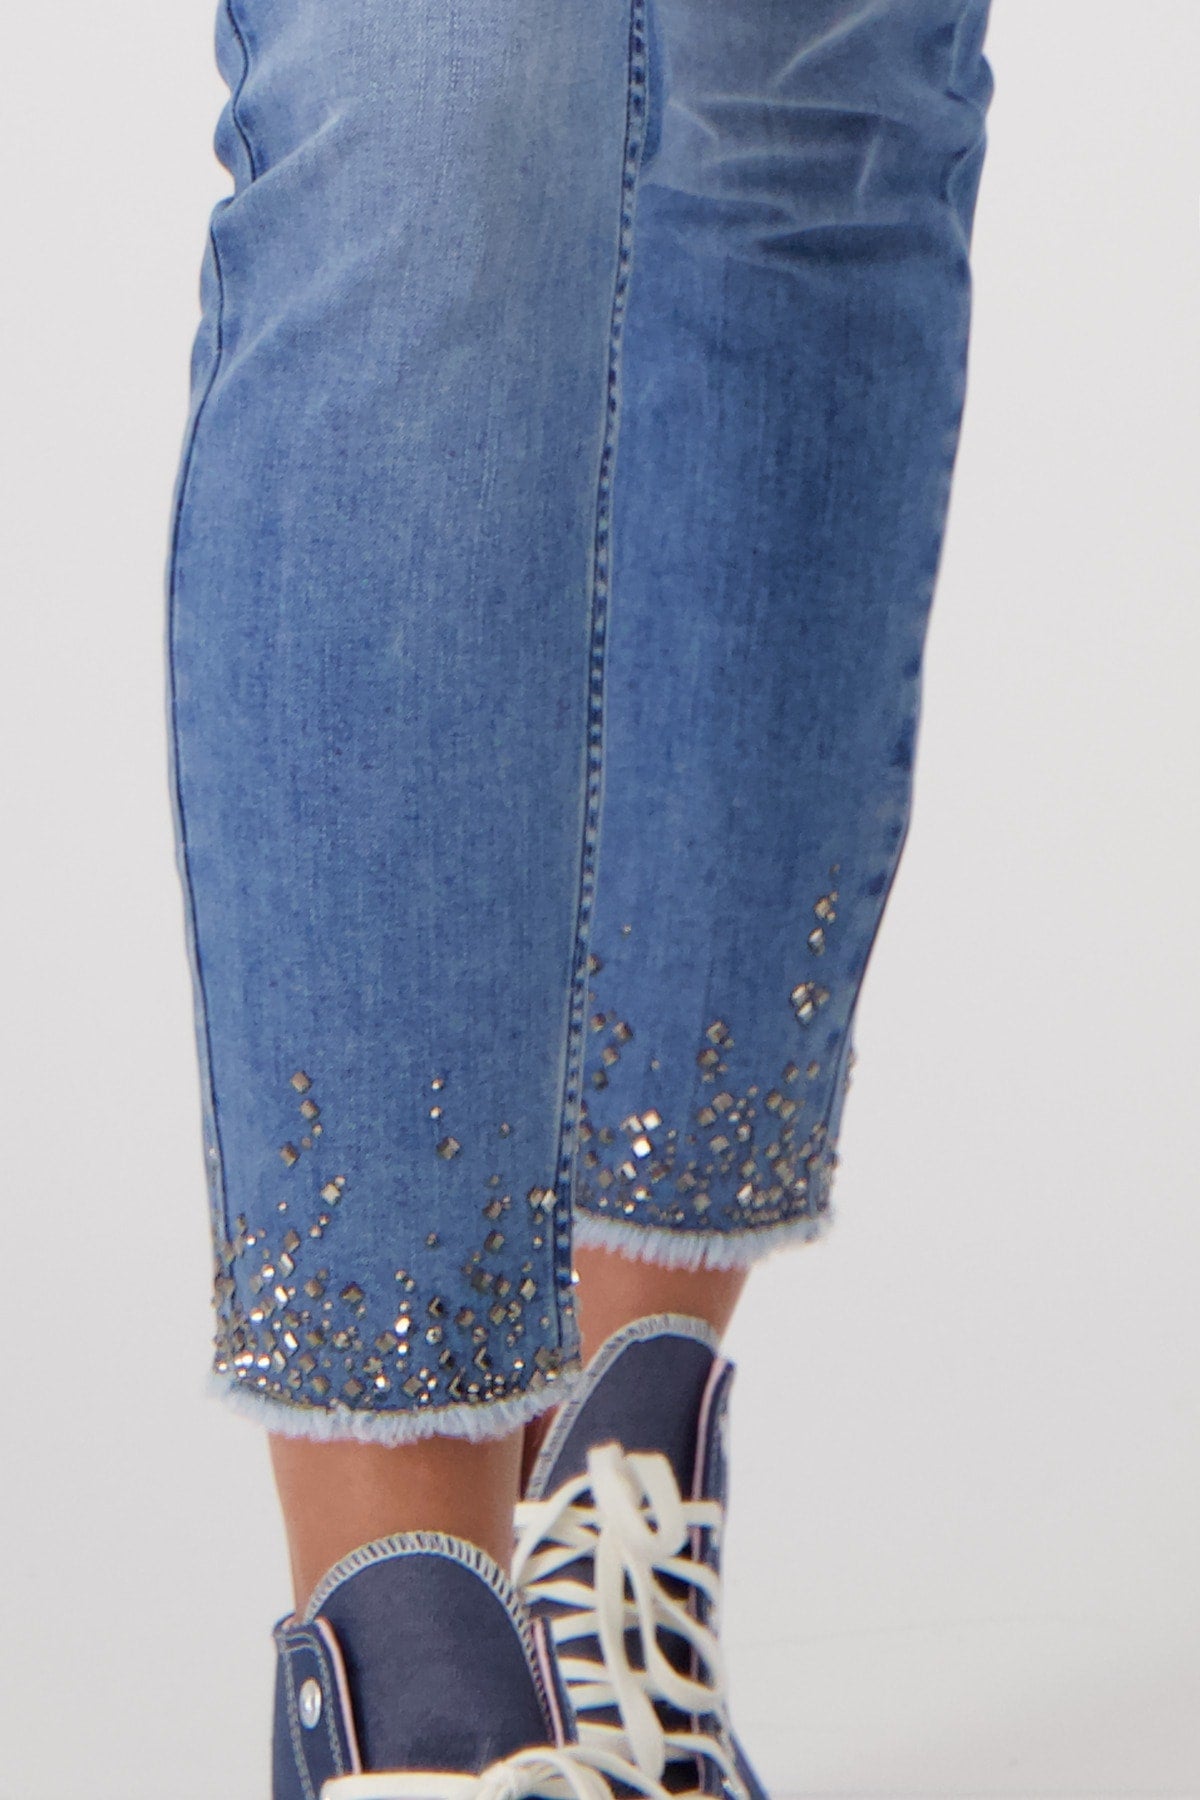 Monari Rhinestone Detail Jeans - Light Denim